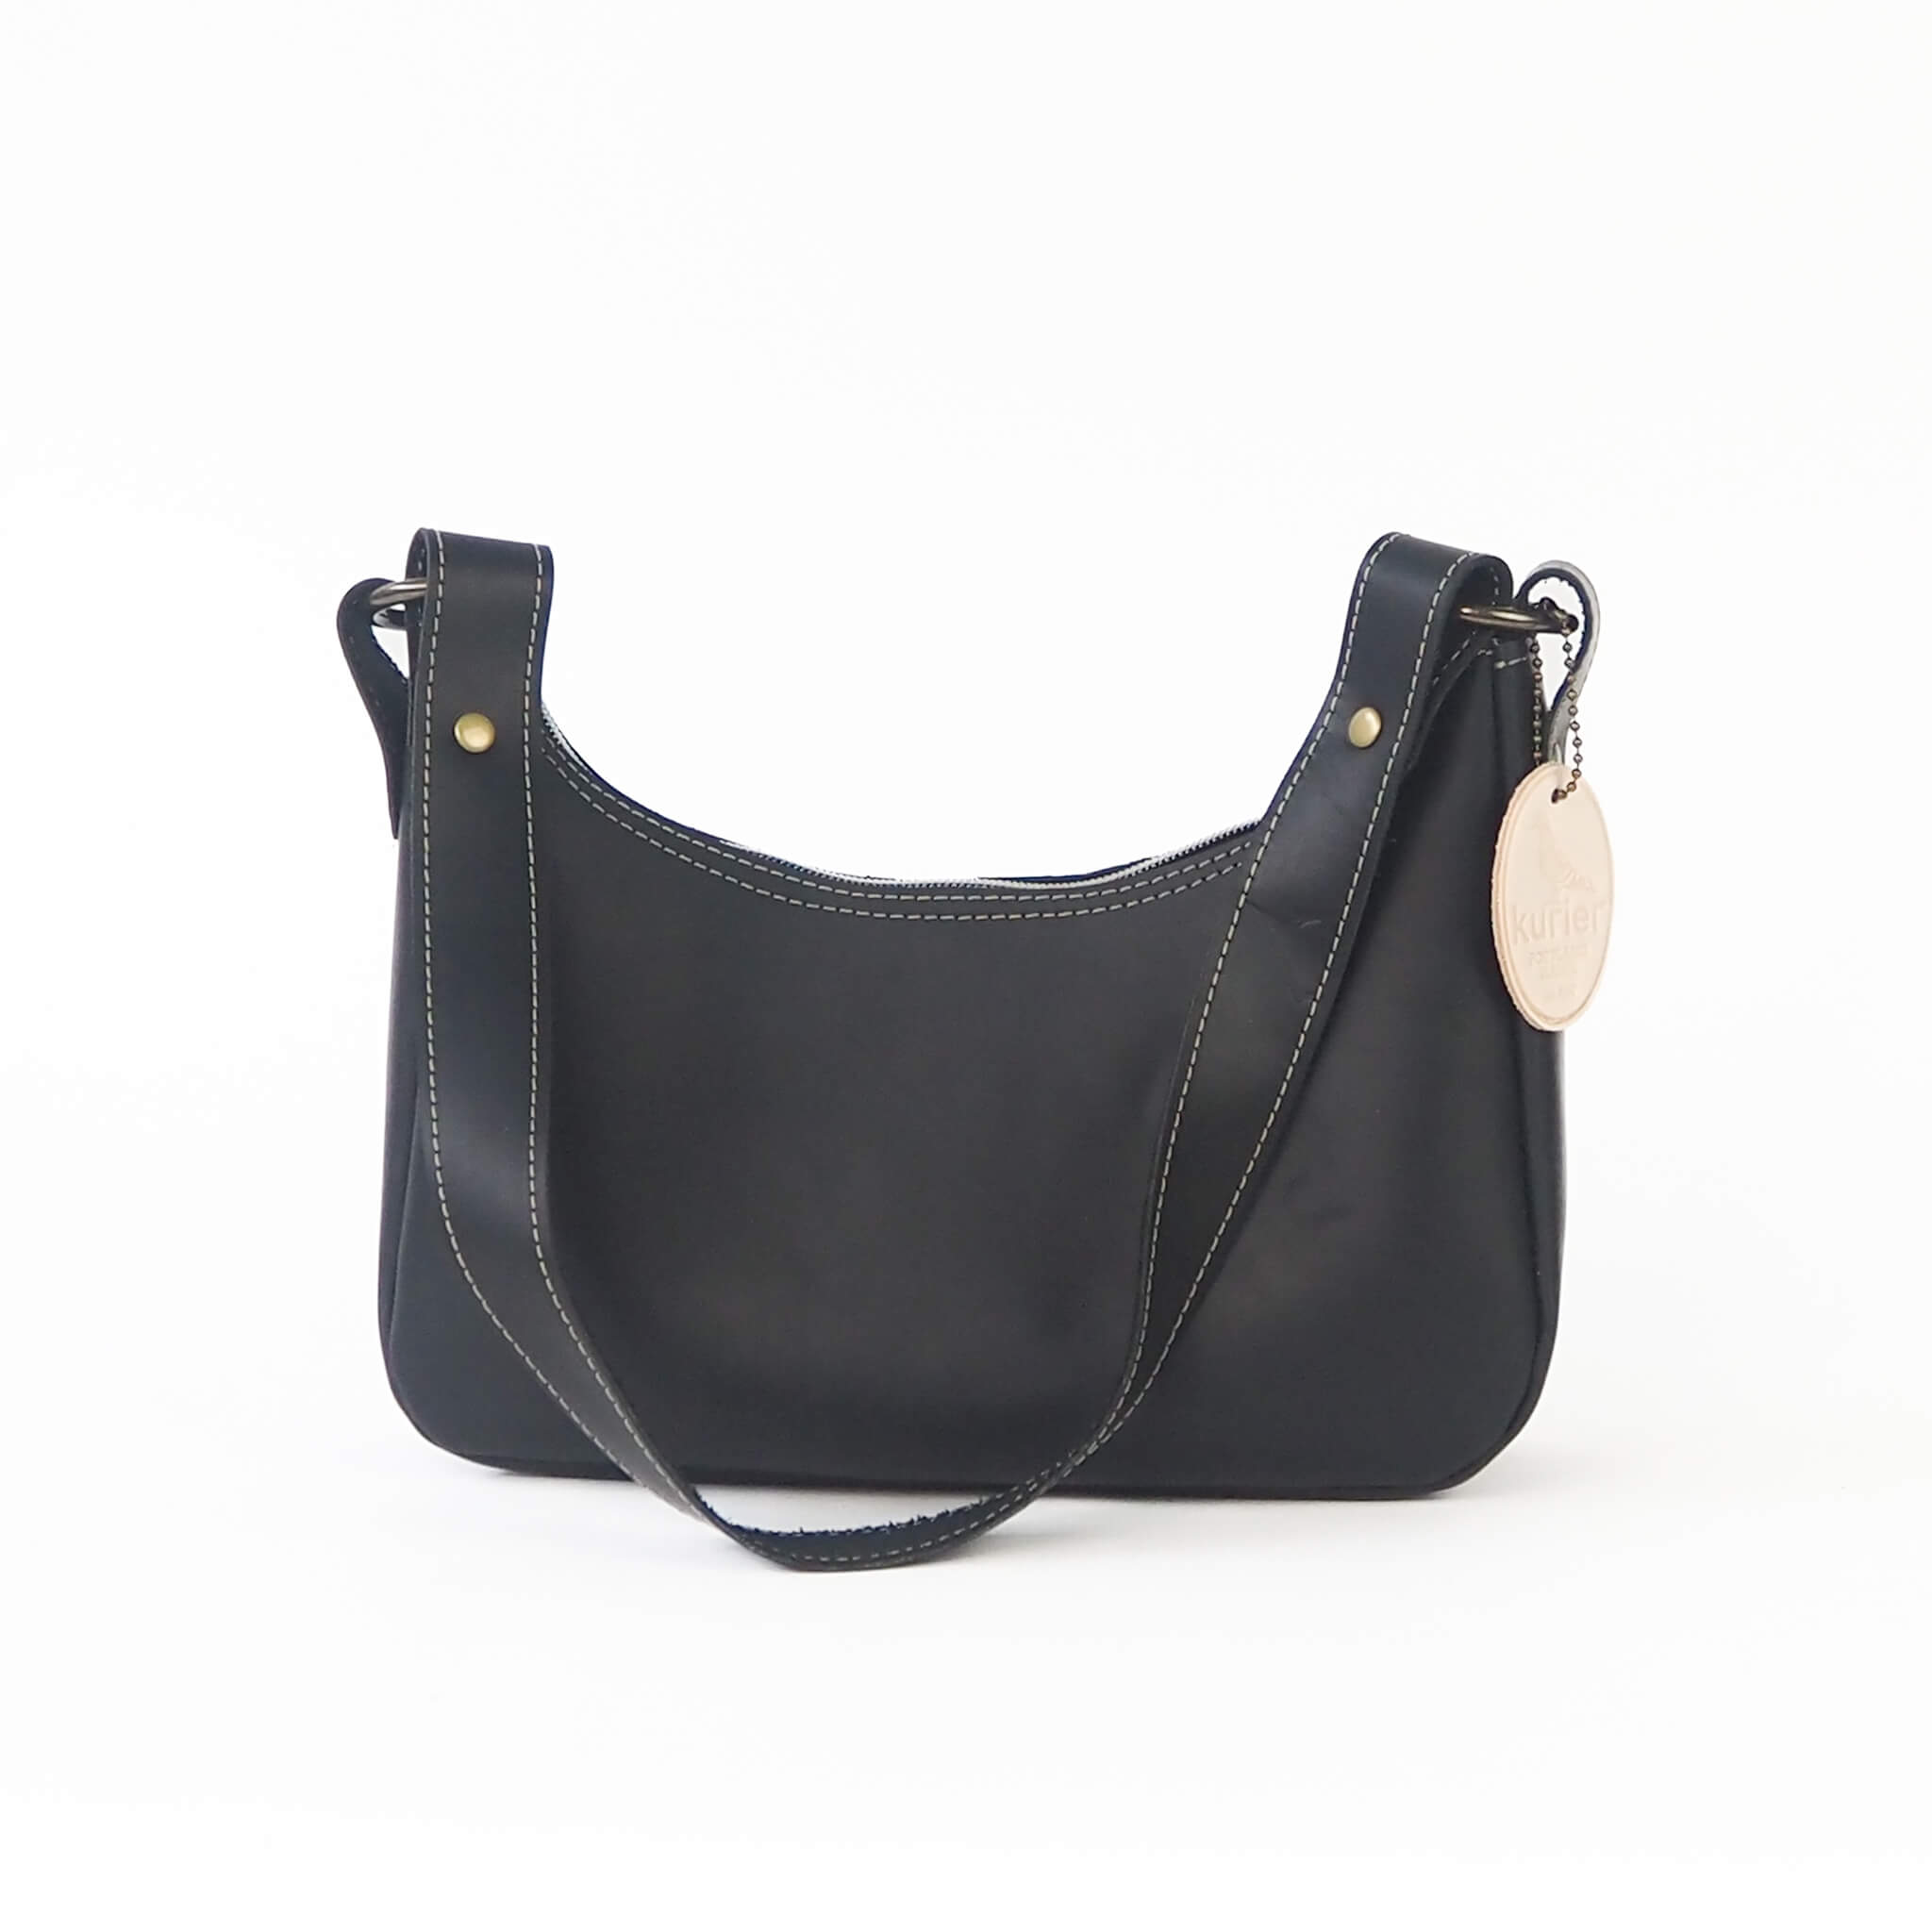 gigi handbag compact zipper handmade leather - coal front view